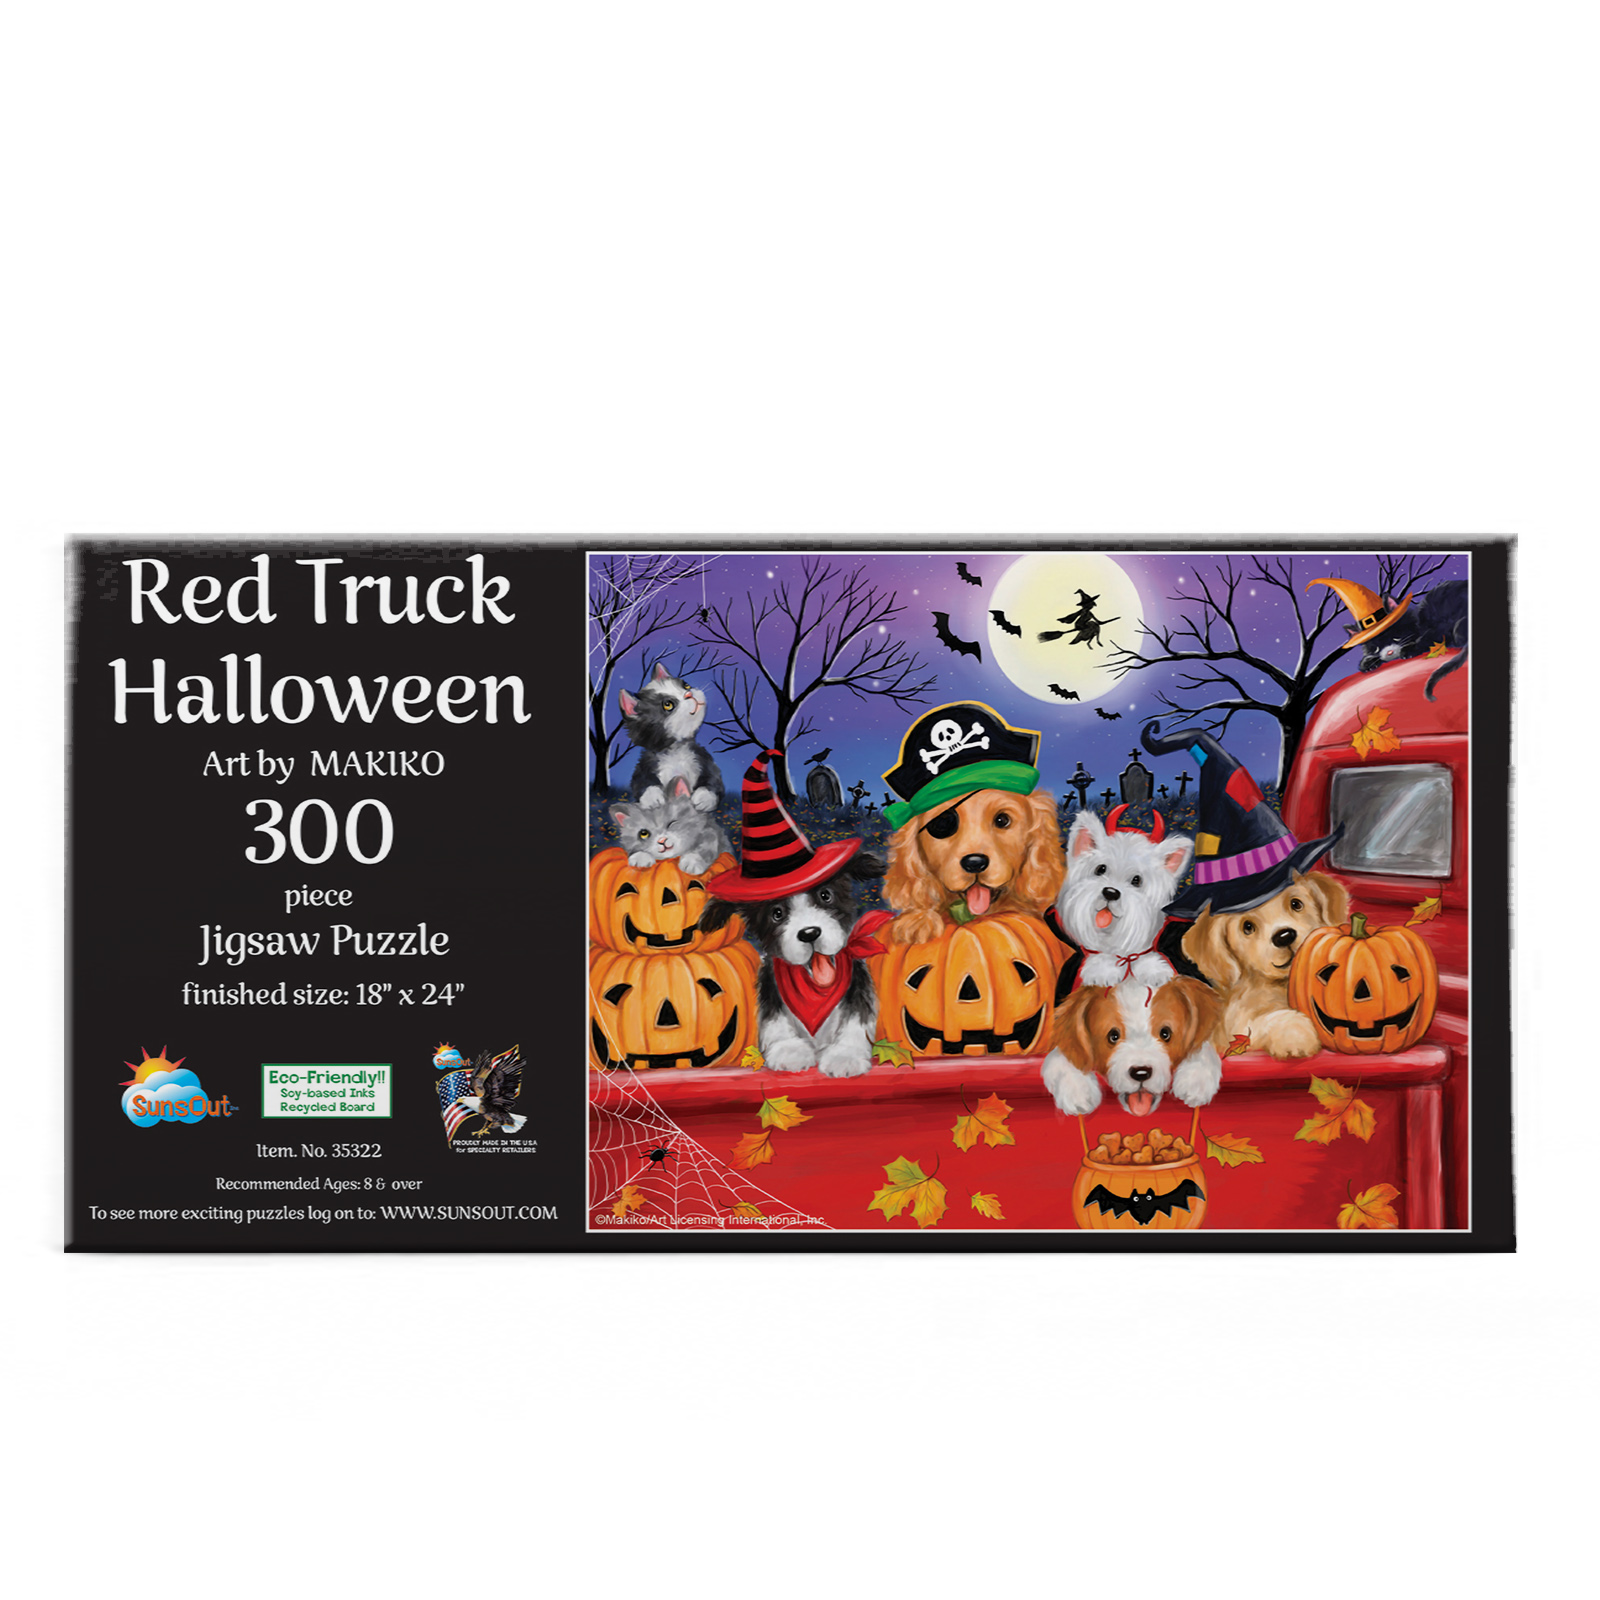 Red Truck Halloween